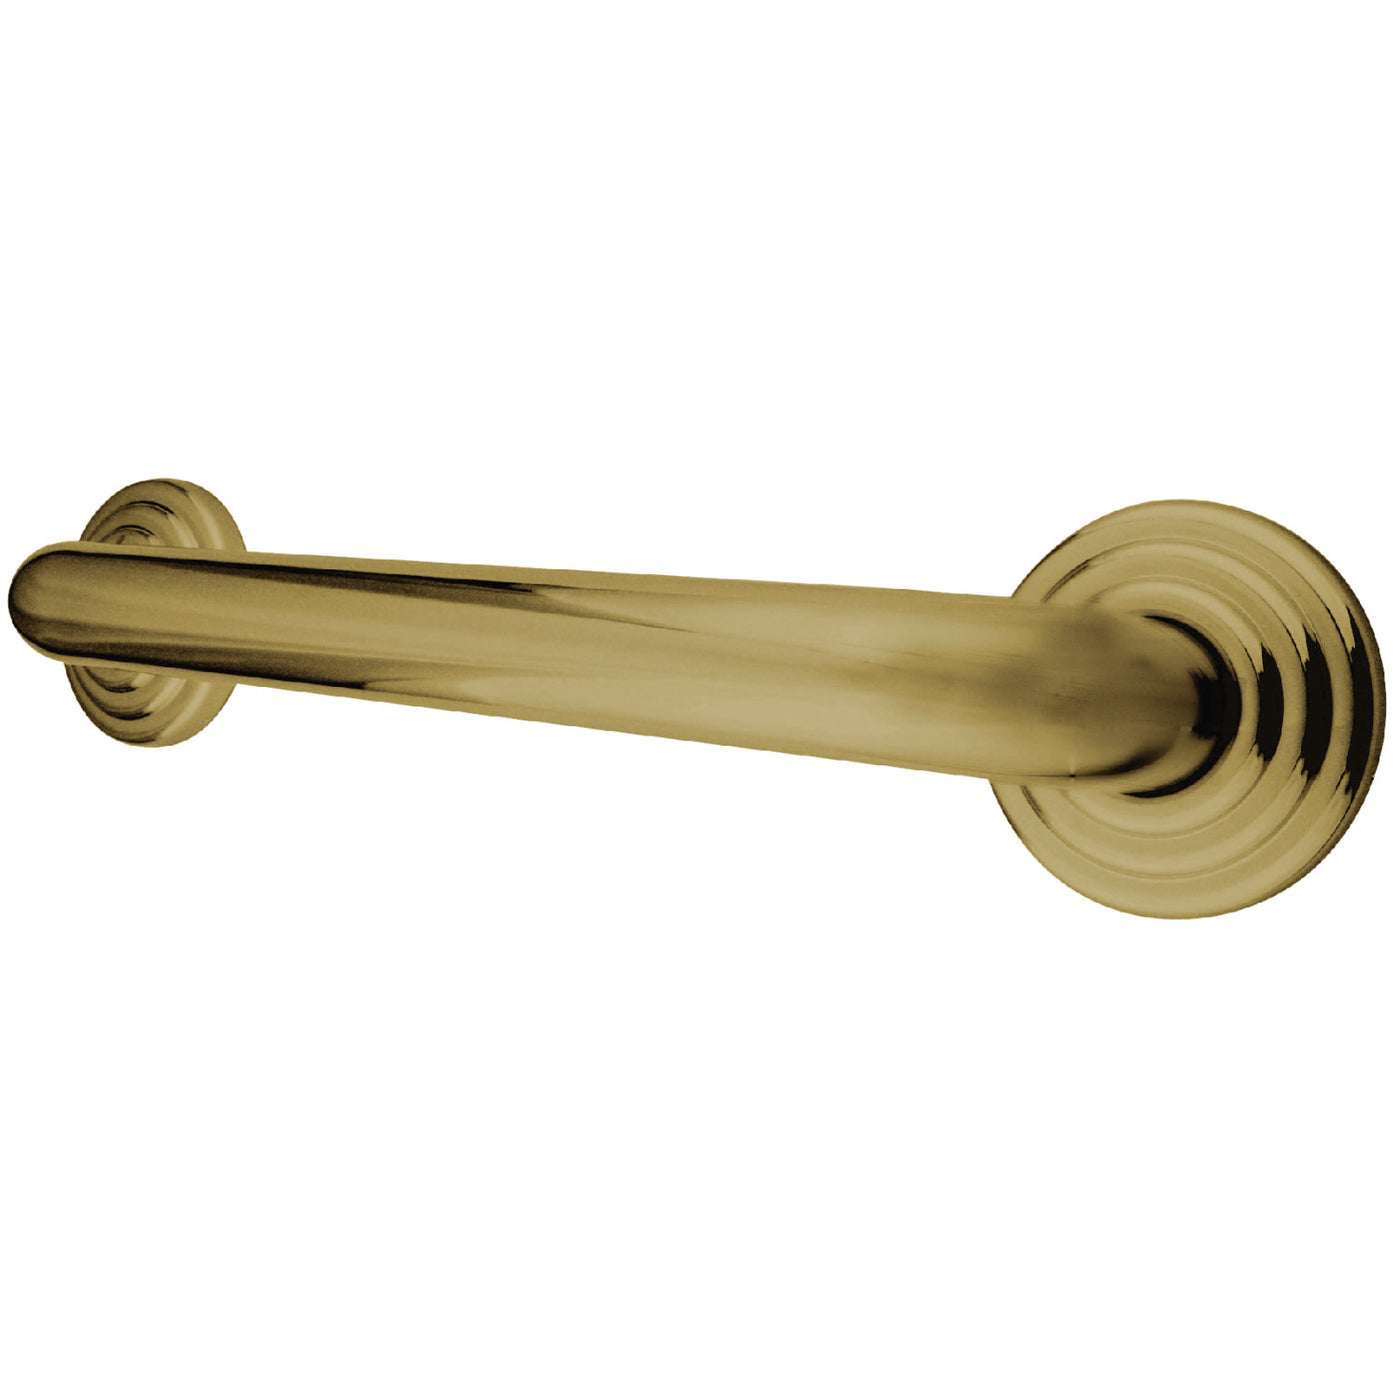 Elements of Design EDR314302 30-Inch x 1-1/4-Inch O.D Grab Bar, Polished Brass